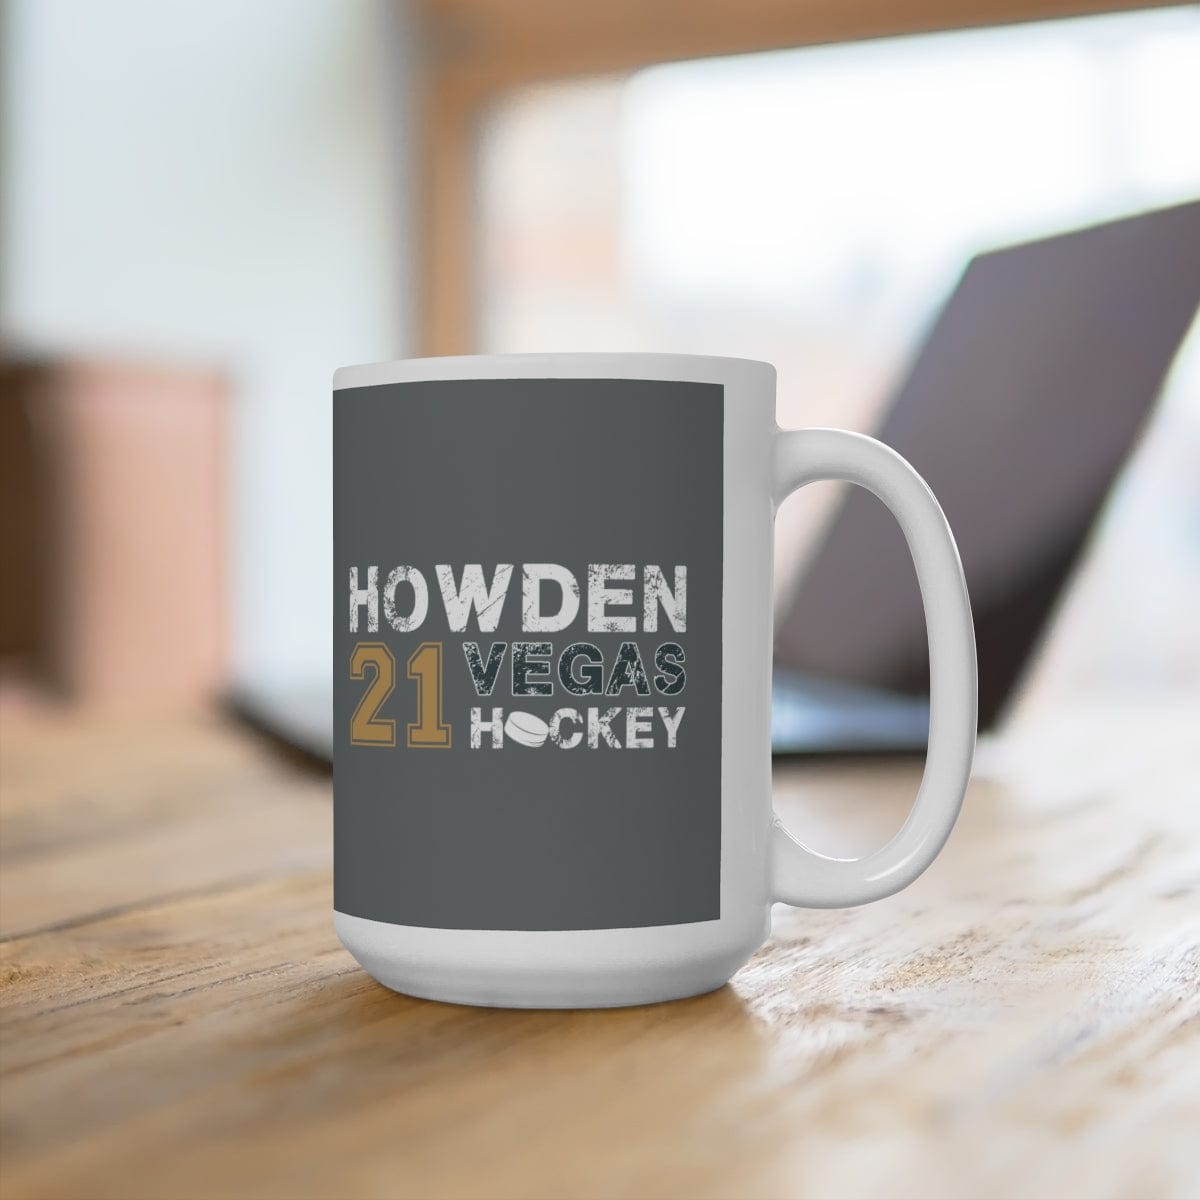 https://cdn.shopify.com/s/files/1/0030/0652/9603/products/15oz-howden-21-vegas-hockey-ceramic-coffee-mug-in-gray-15oz-mug-41713548886244_1600x.jpg?v=1668913724